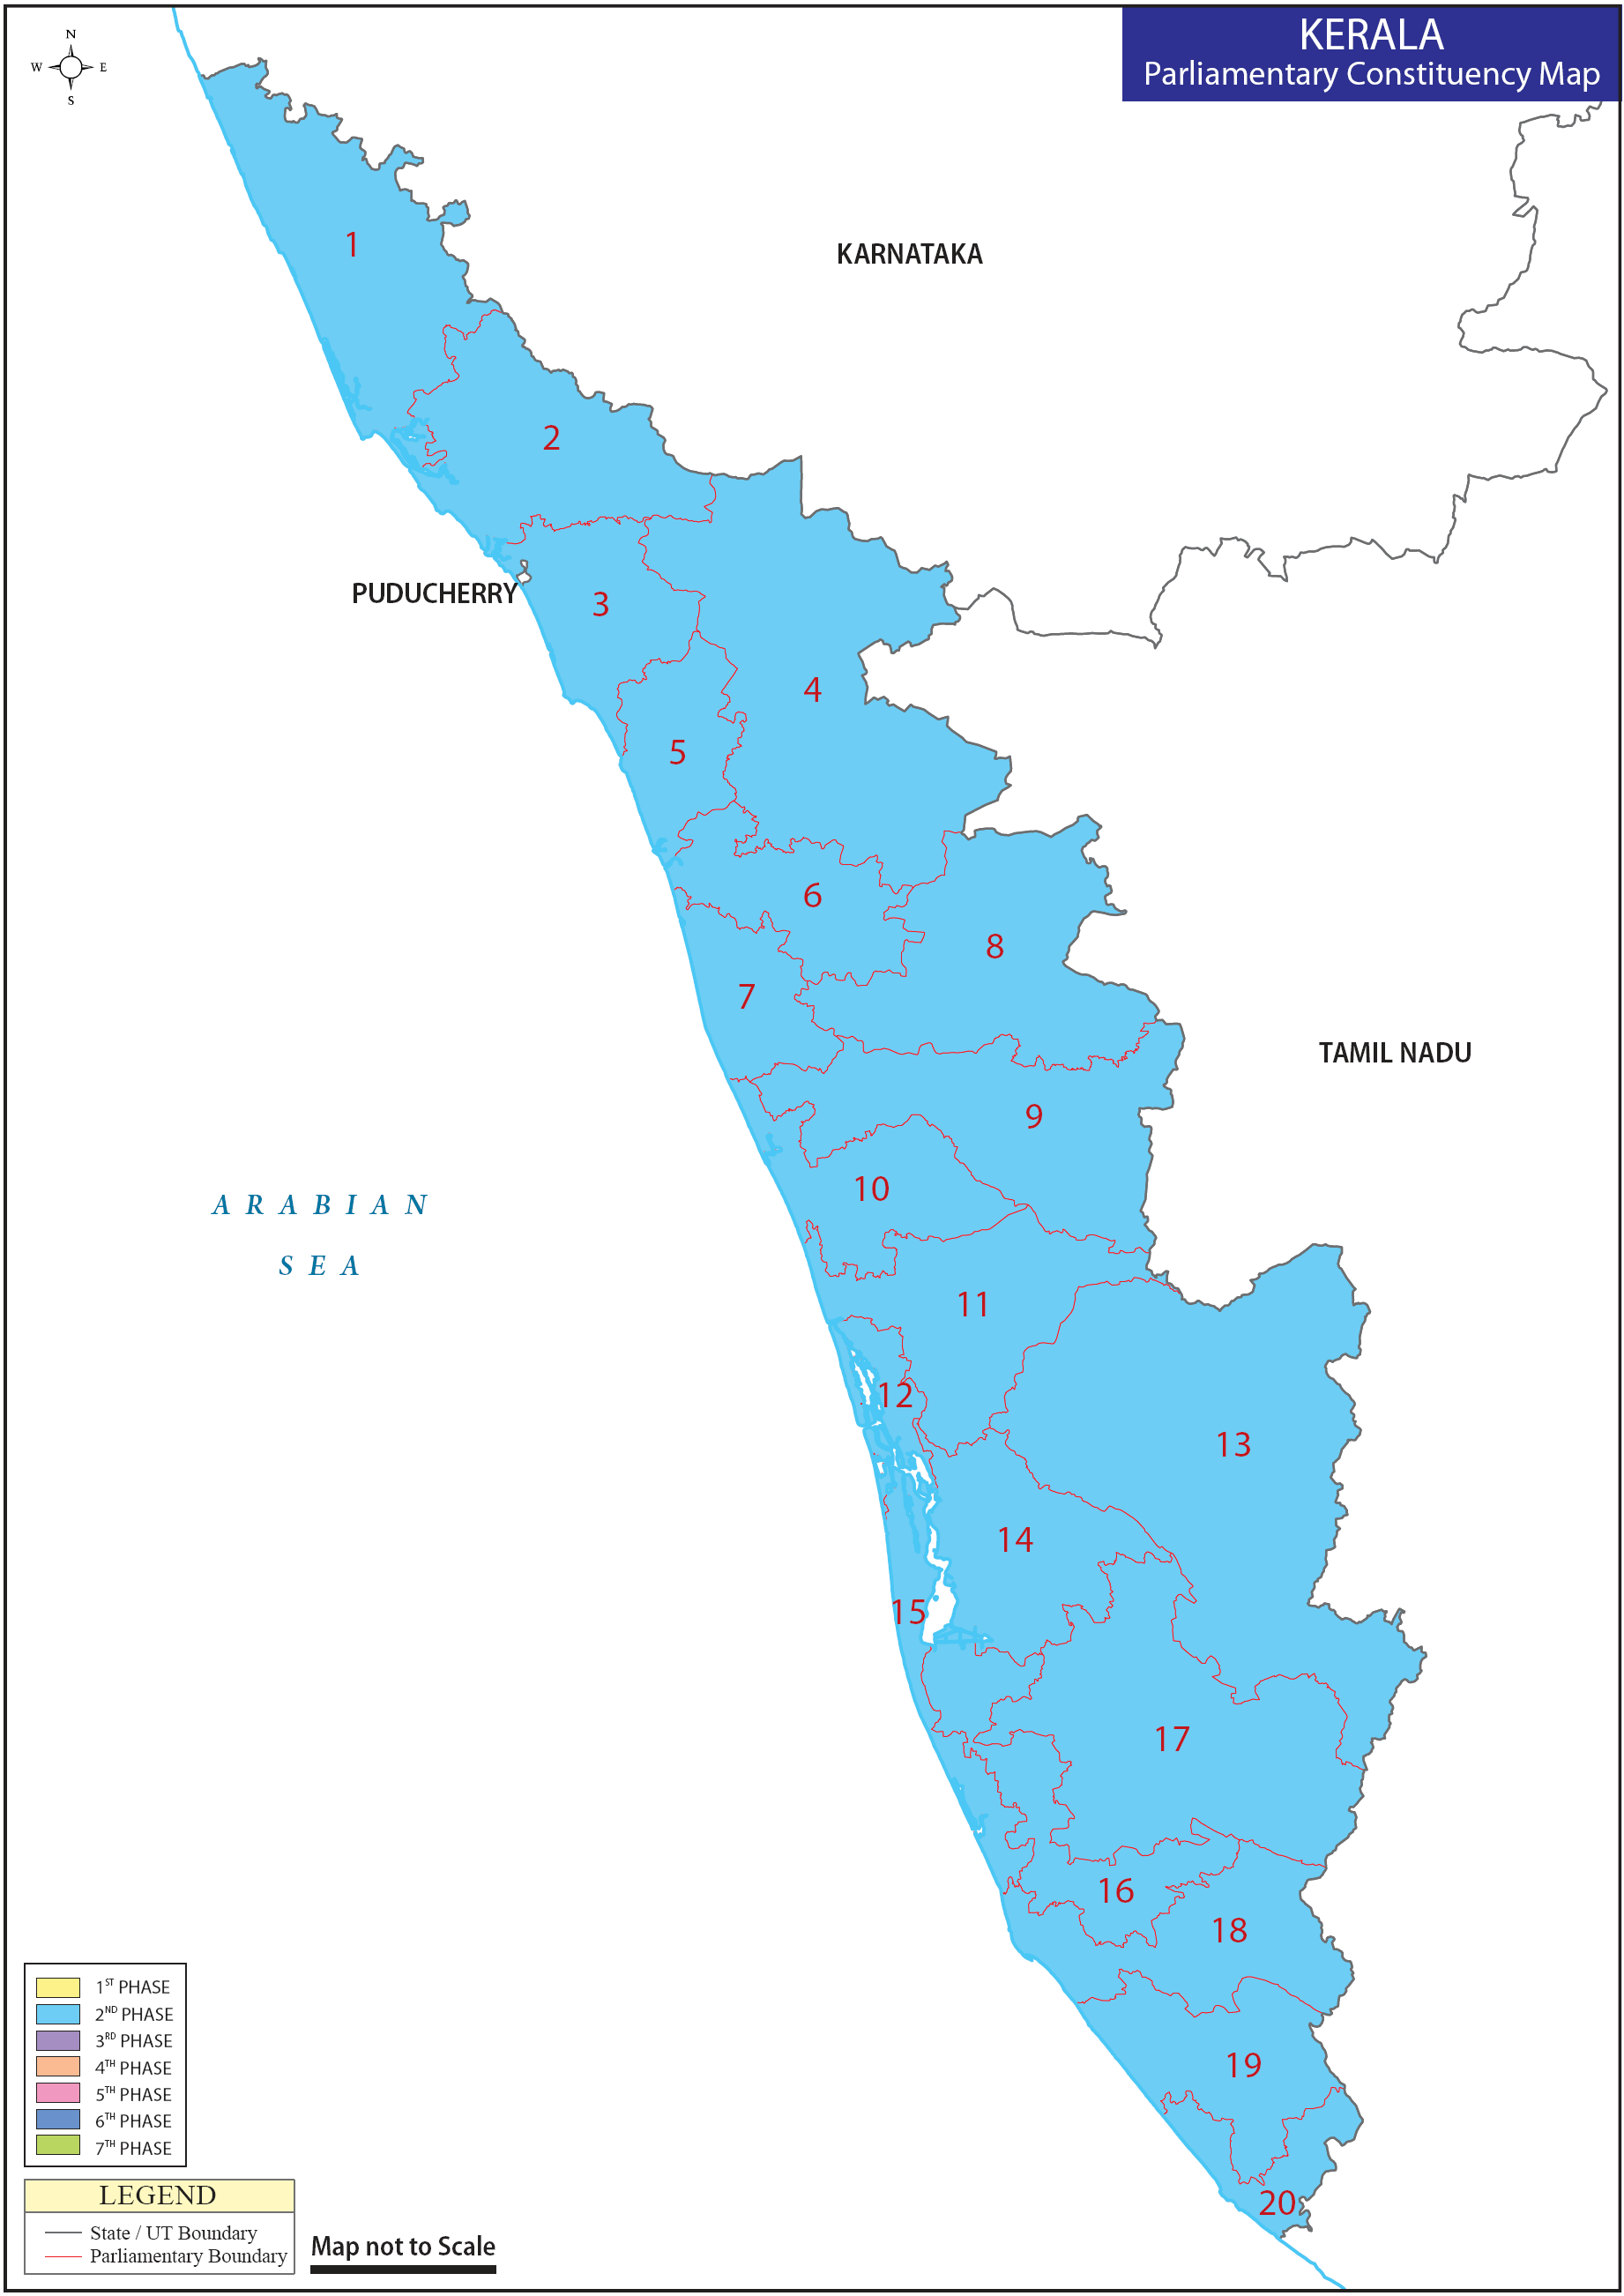 Kerala Parliamentary Constituency Map